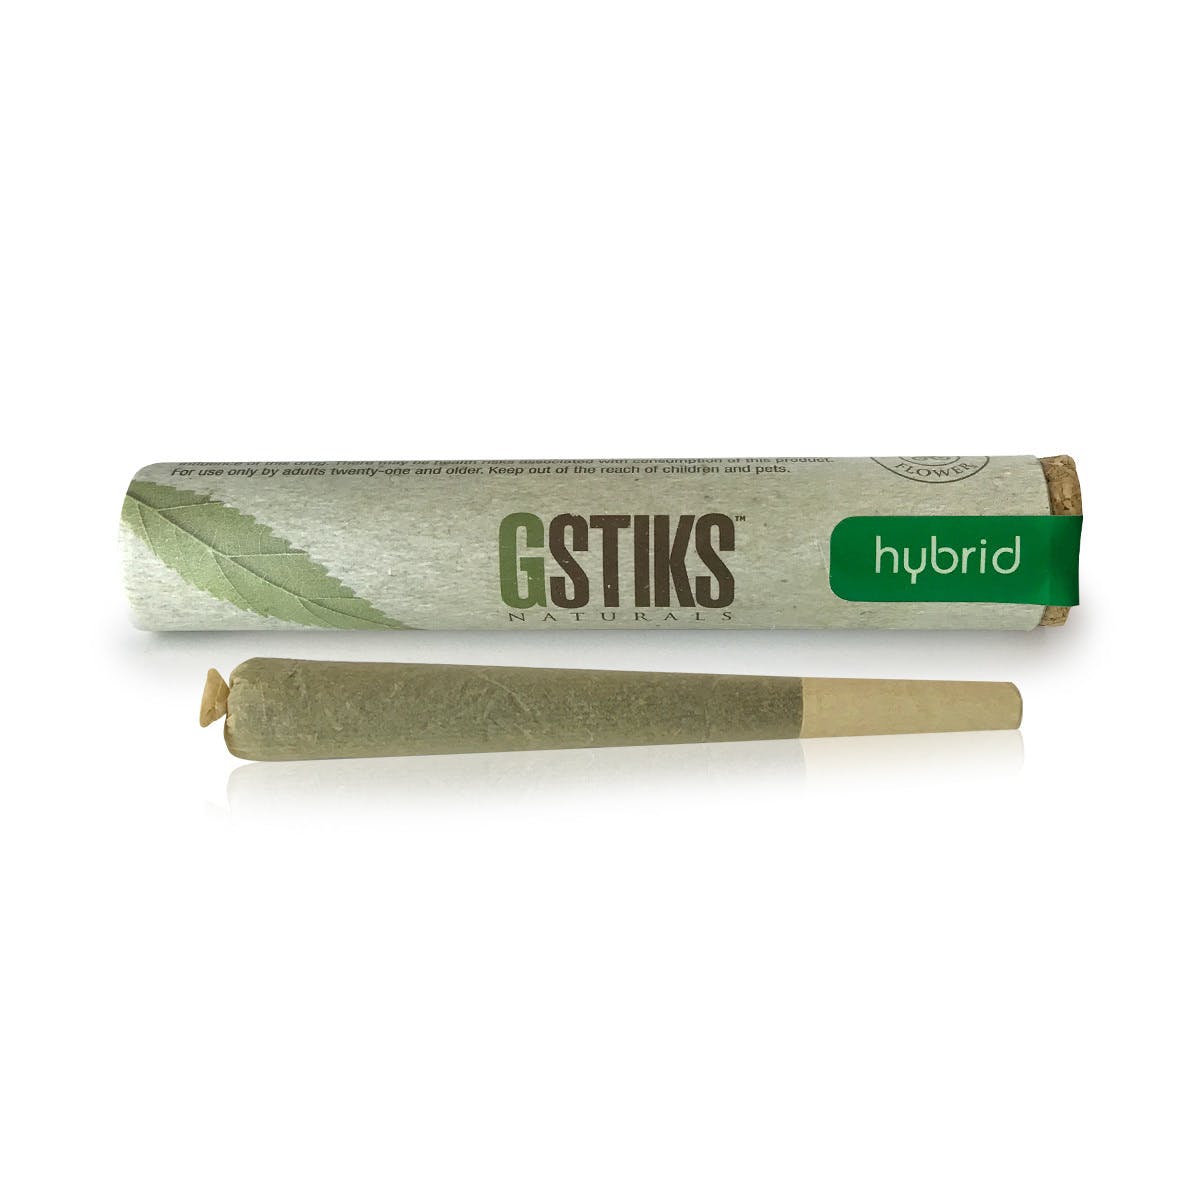 marijuana-dispensaries-herbs-and-essential-oils-in-hemet-g-stik-natural-hybrid